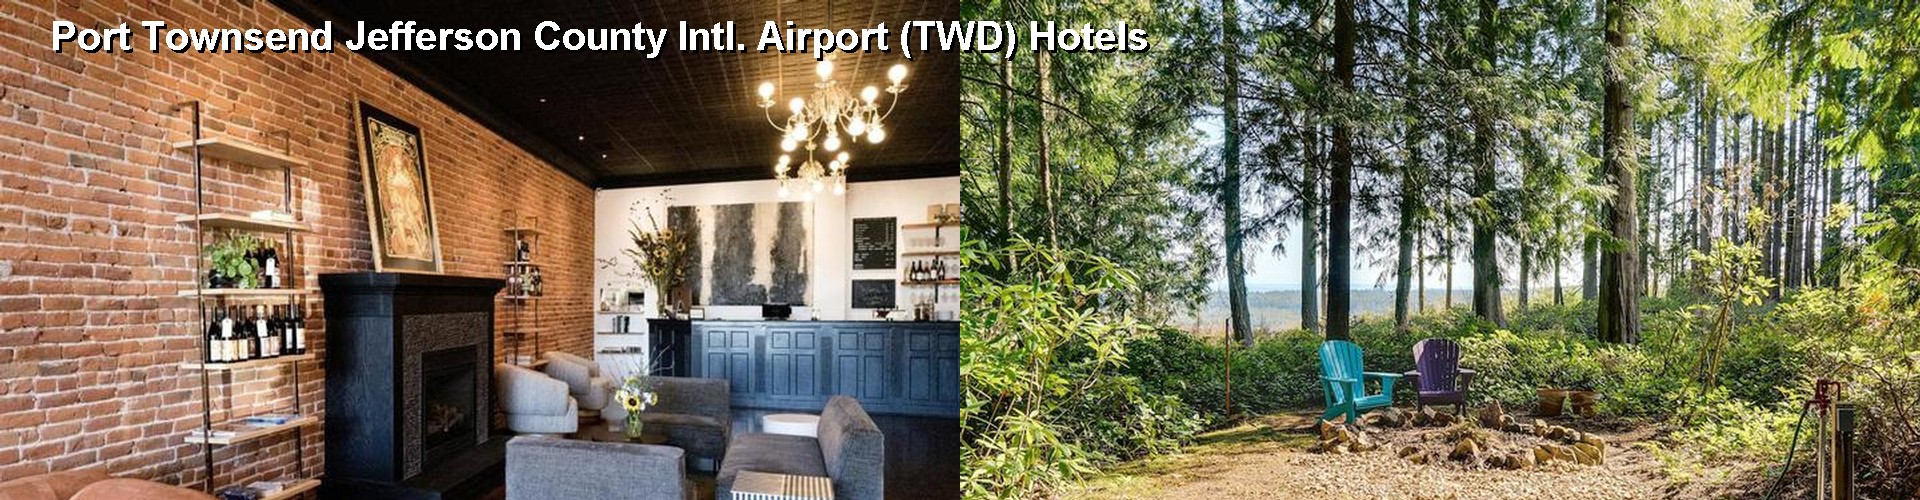 5 Best Hotels near Port Townsend Jefferson County Intl. Airport (TWD)